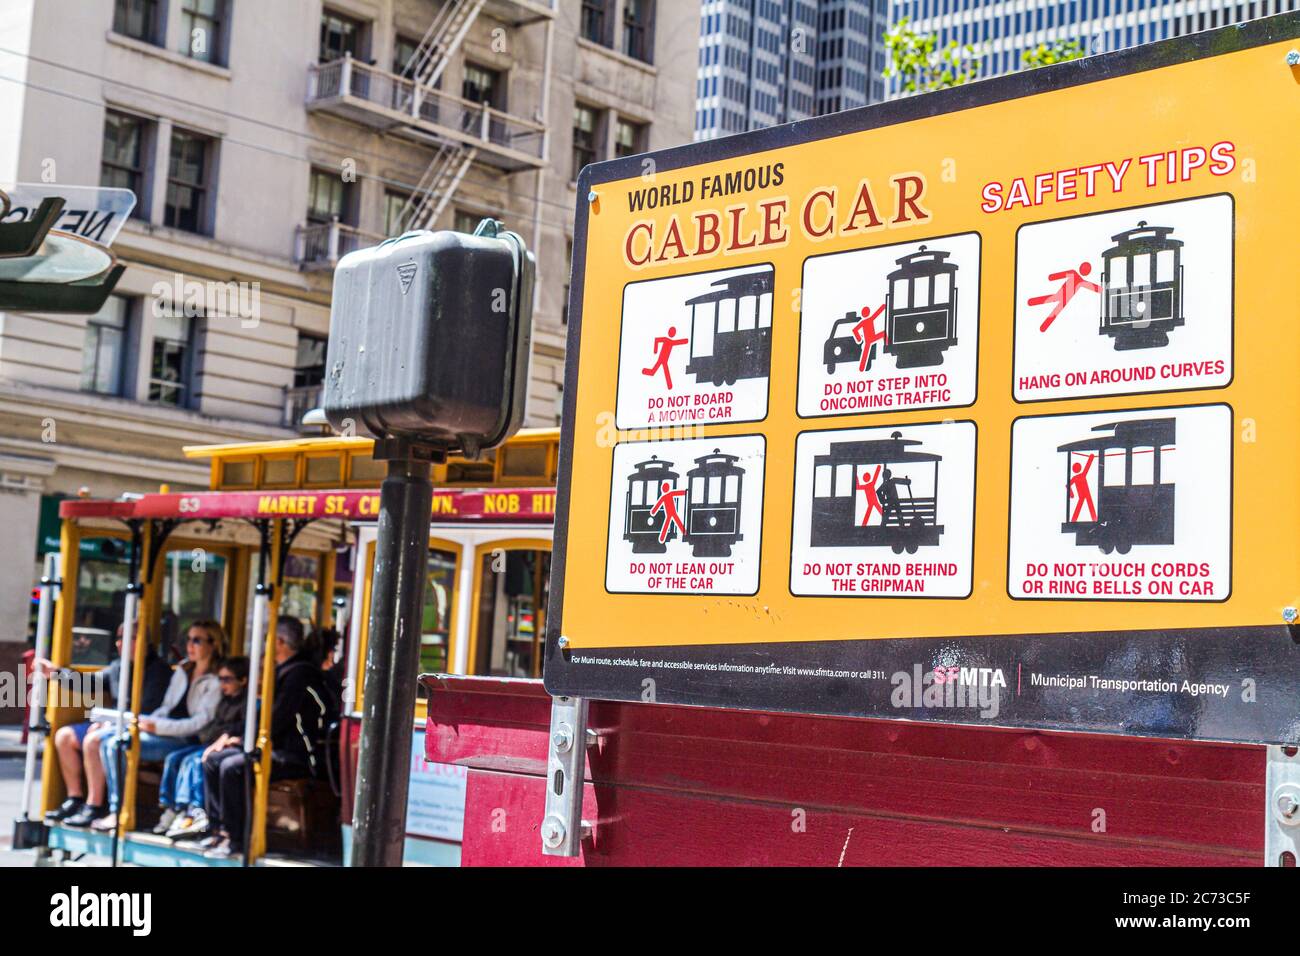 San Francisco California,Market Street,near Spear Street,cable car safety tips,sign,MTA,stop,passenger passengers rider riders,information,proper beha Stock Photo